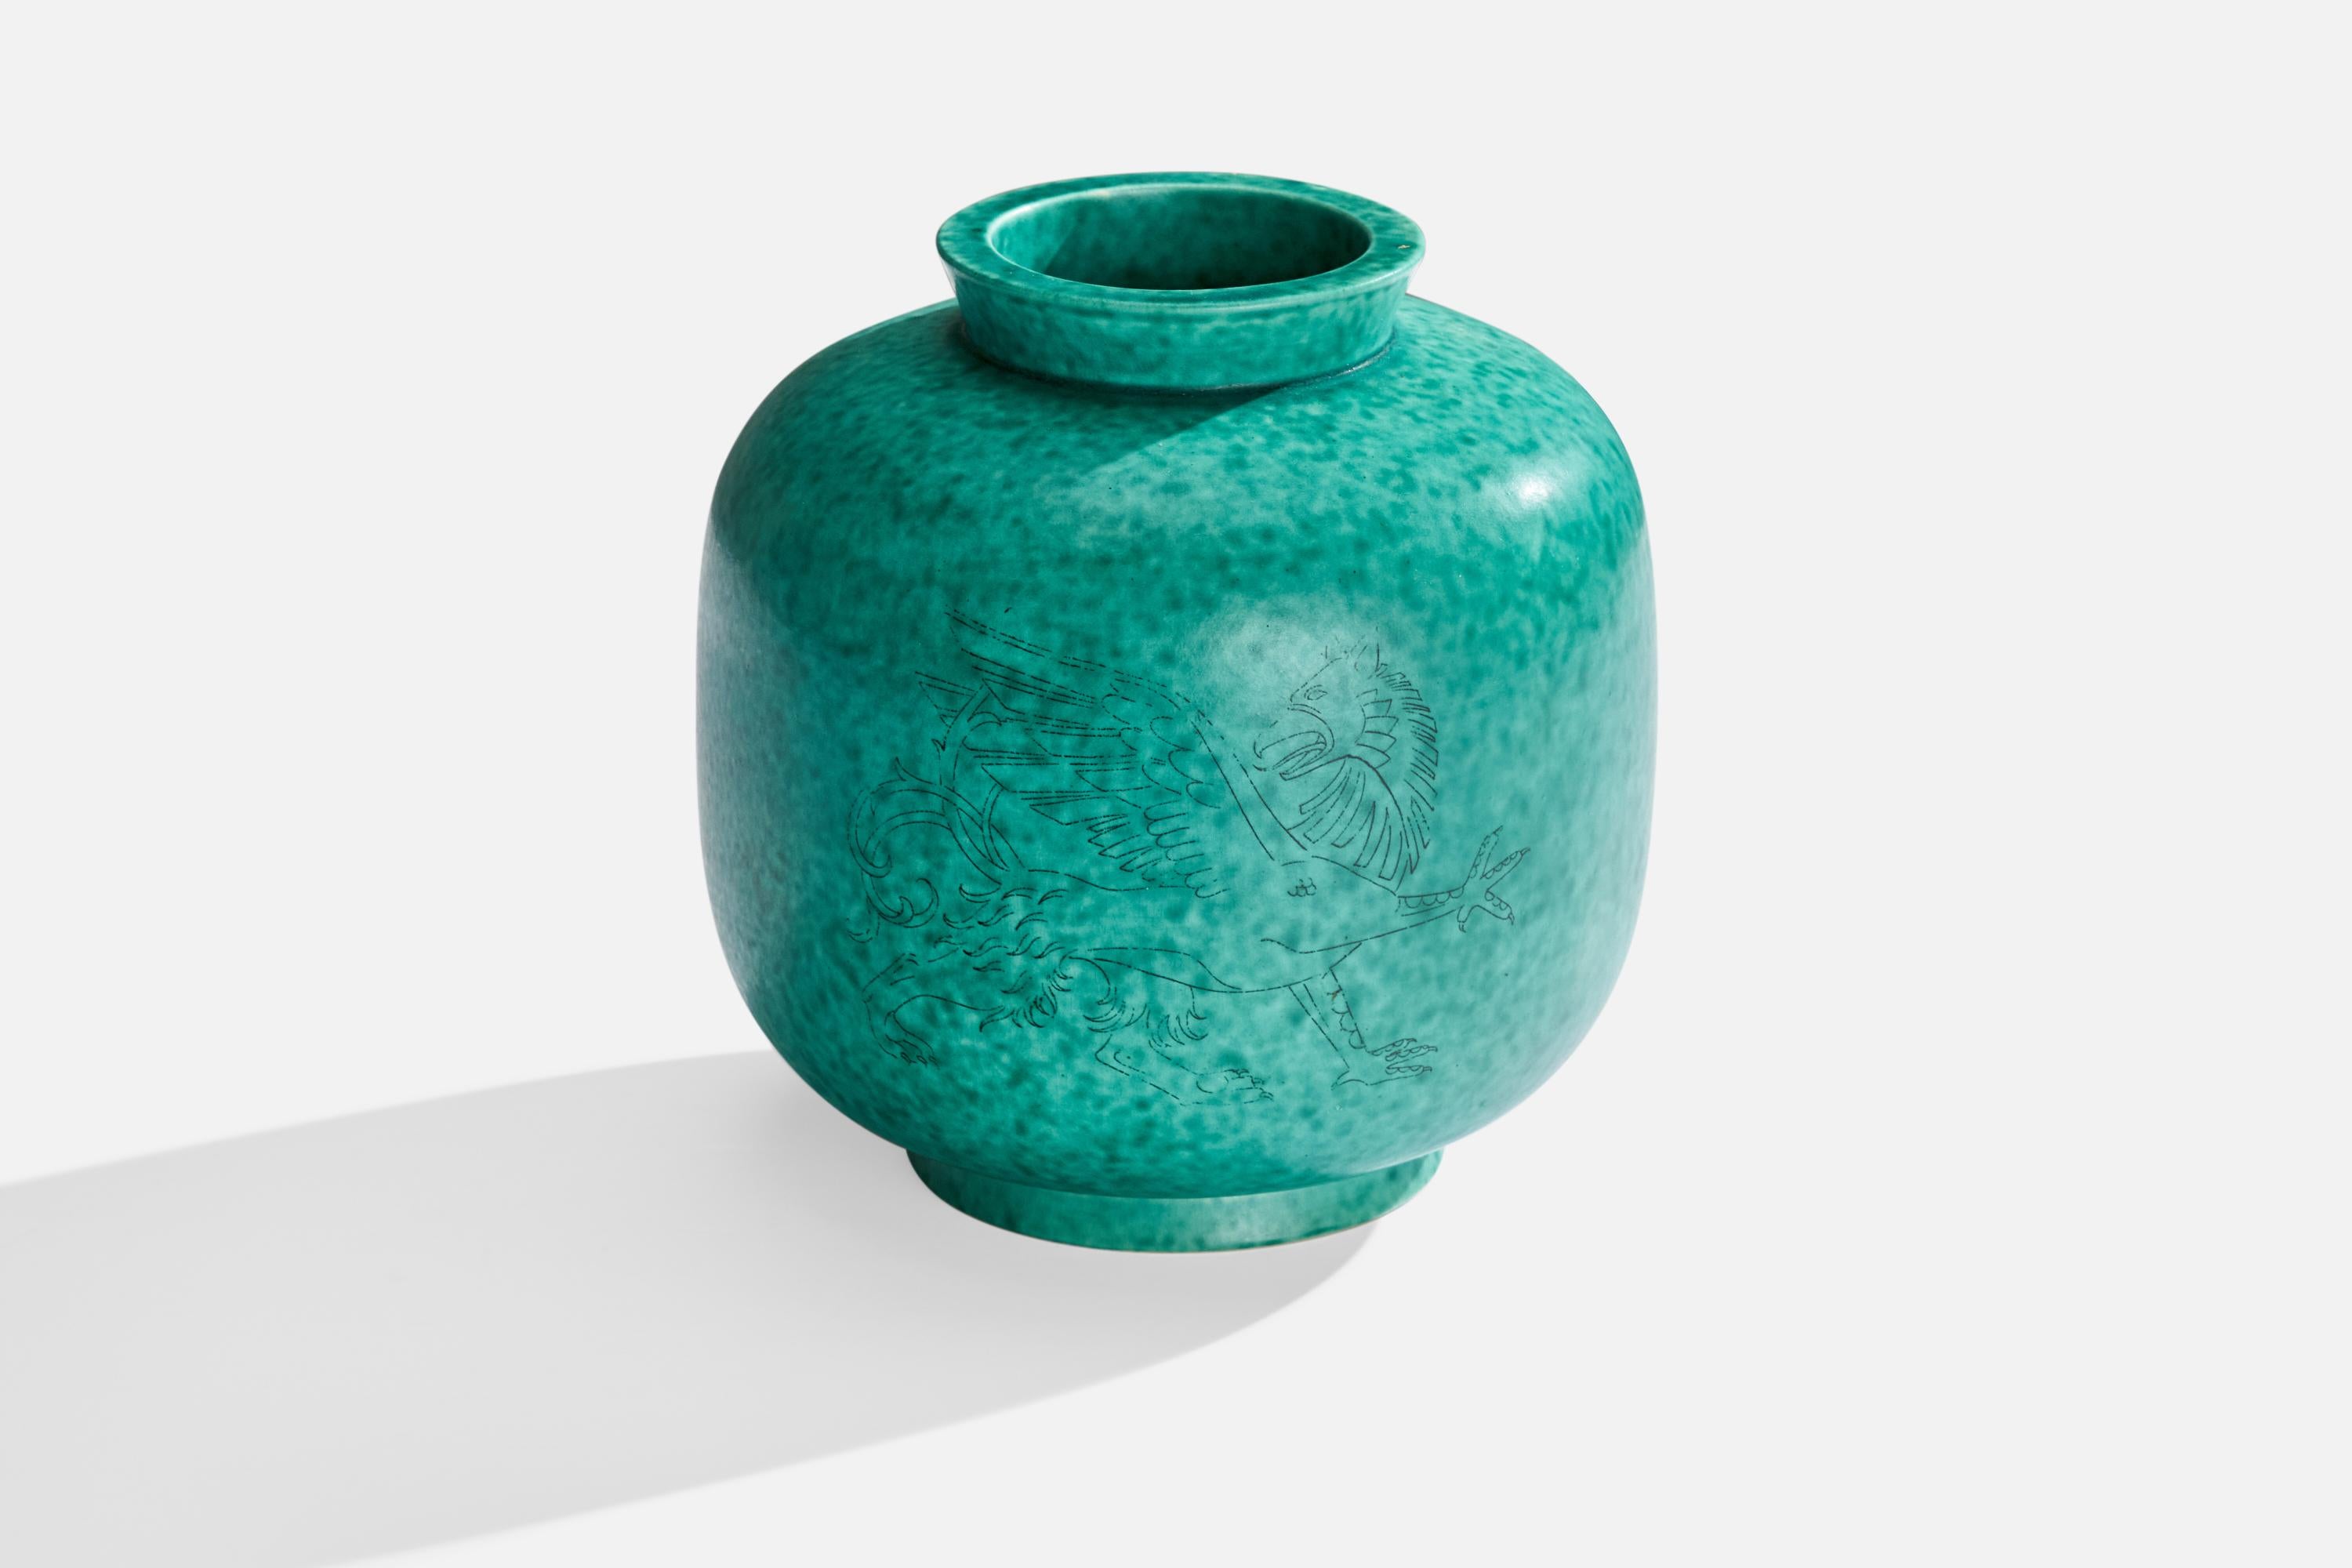 A green-glazed stoneware vase designed by Wilhelm Kåge and produced by Gustavsberg, Sweden, c. 1950s.